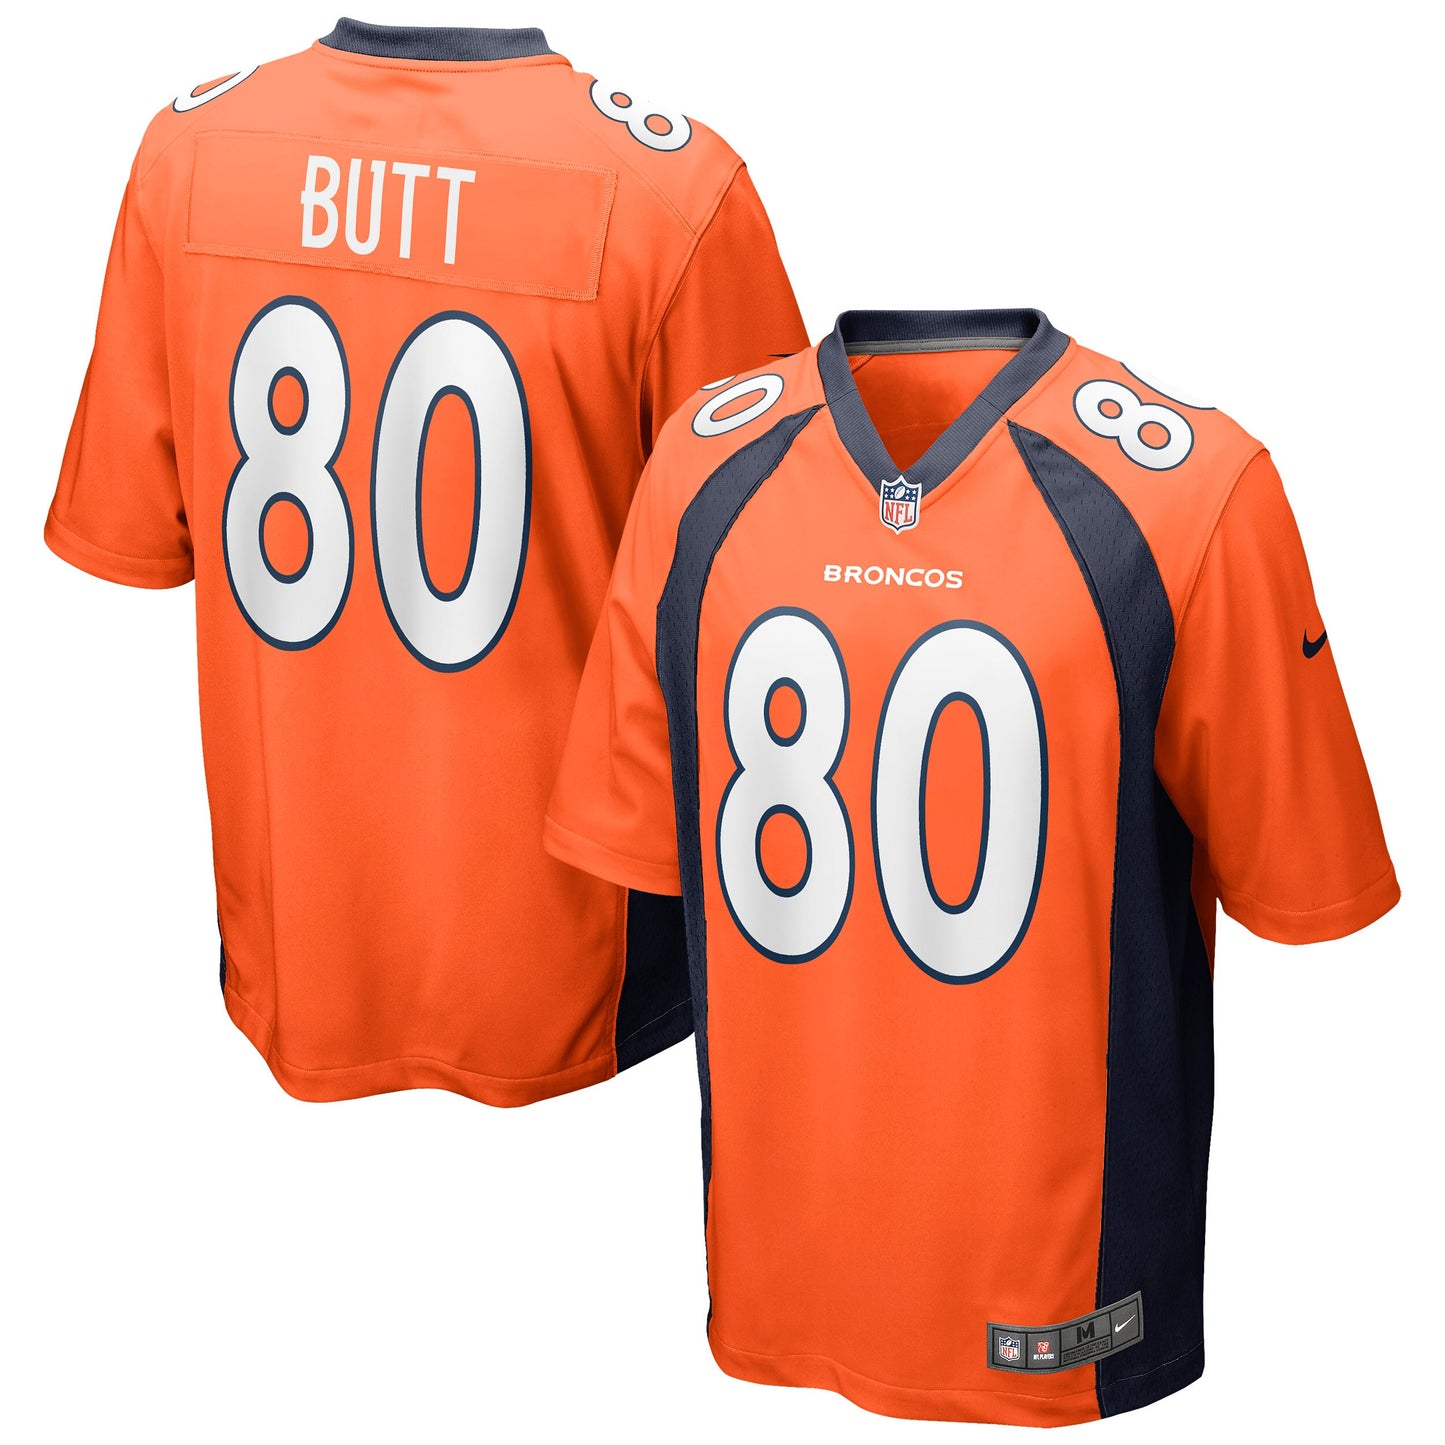 Jake Butt Denver Broncos Nike Game Jersey - Orange